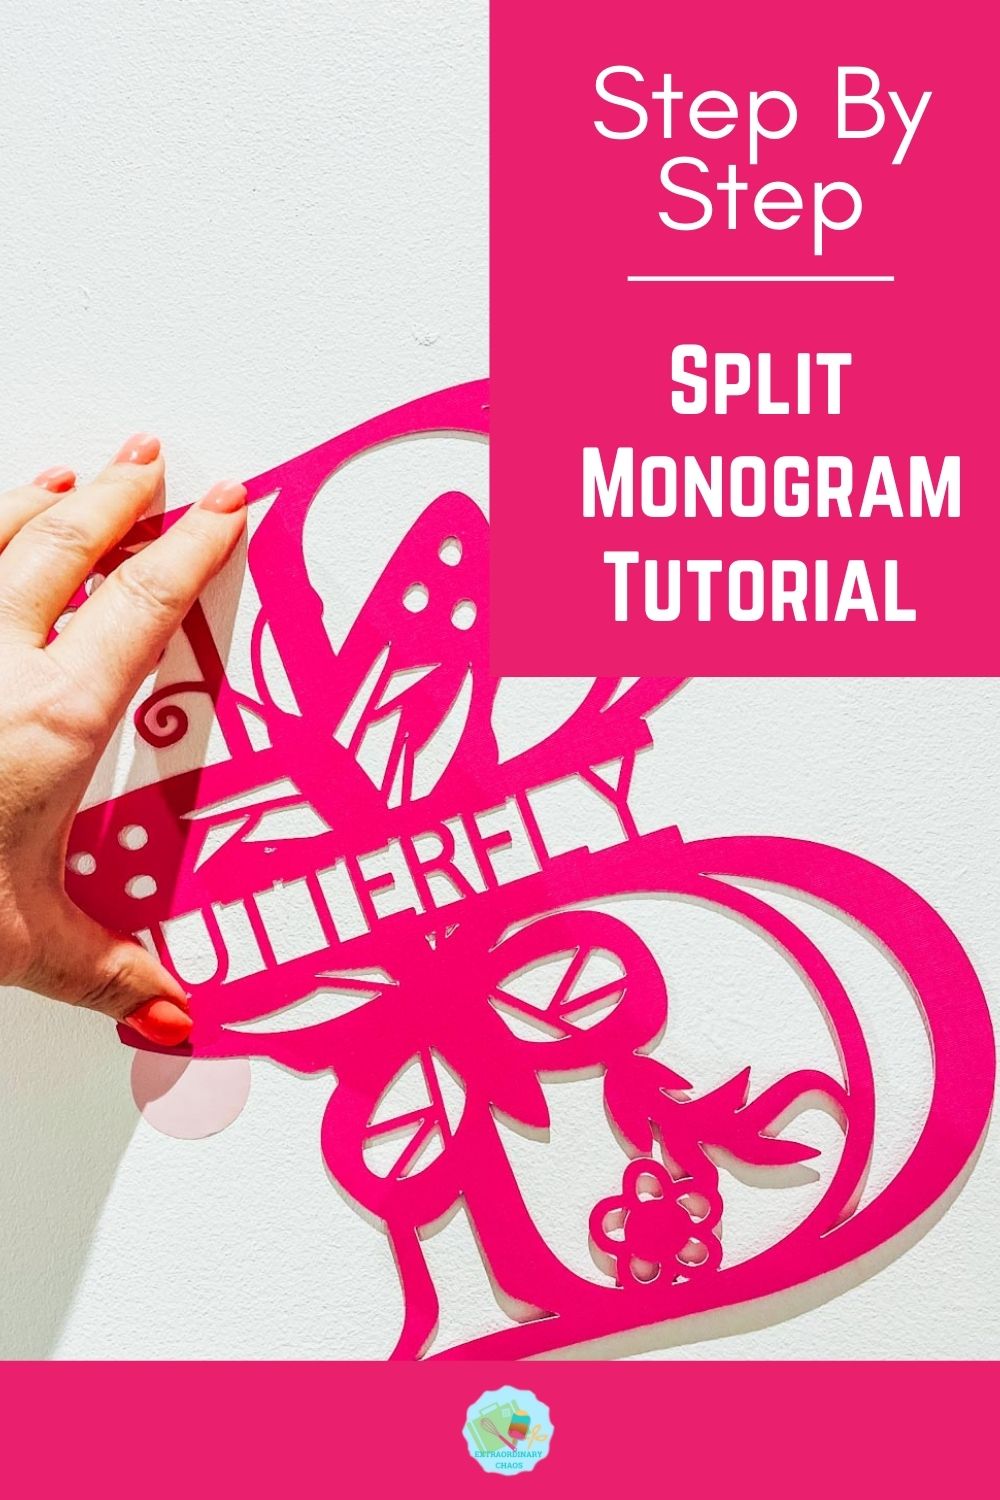 Step by Step Split Monogram Tutorial